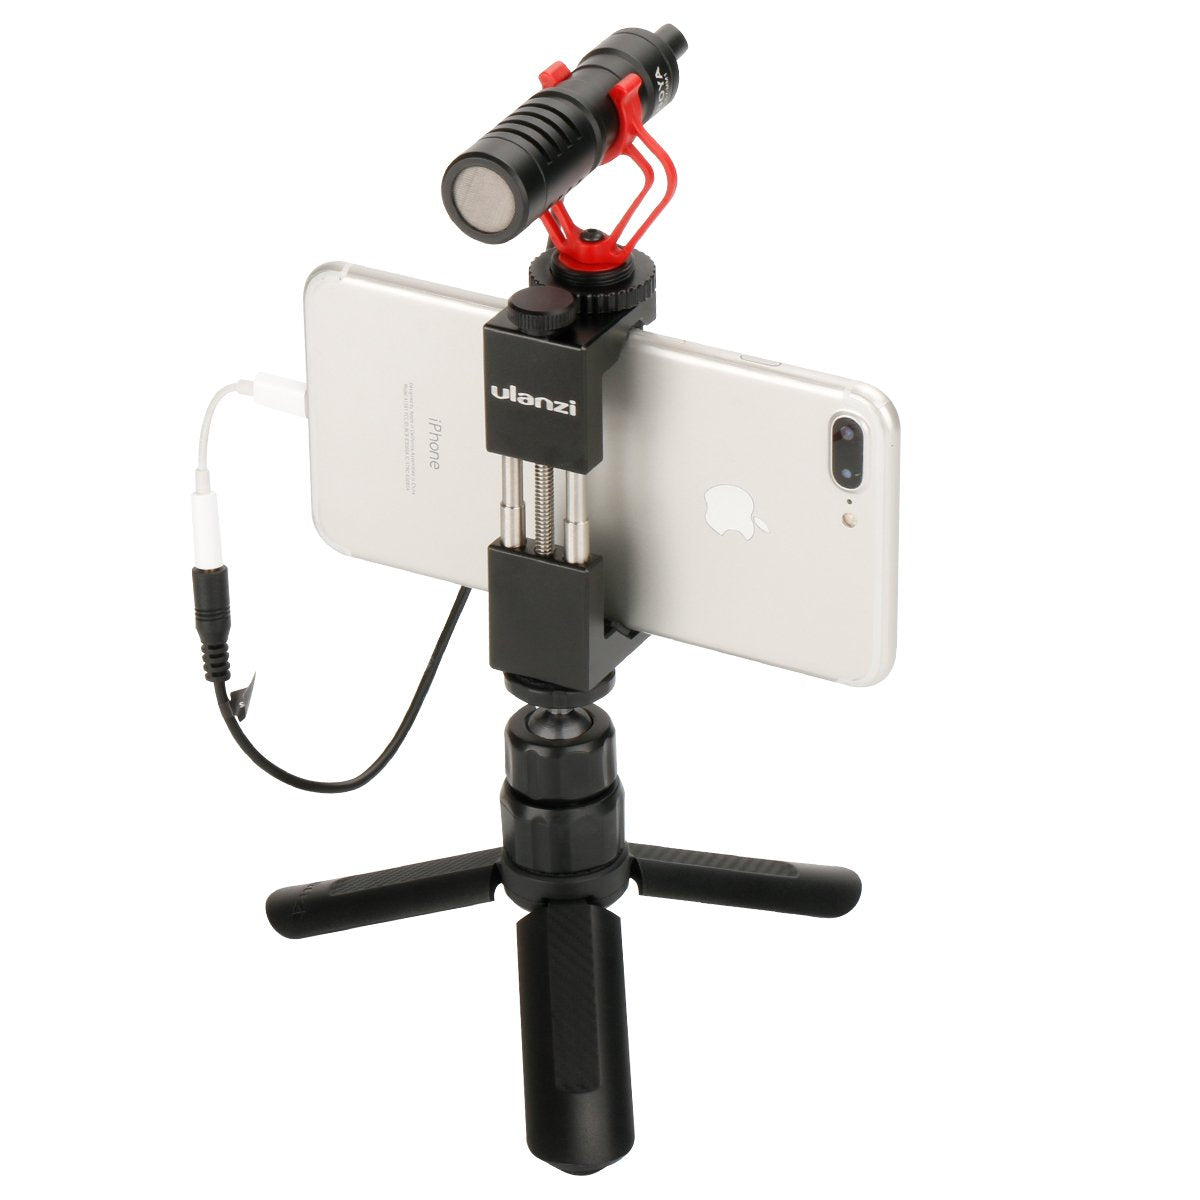 Ulanzi ST-02 Smartphone Video Rig Tripod Mount Adapter with Hot Shoe Mount